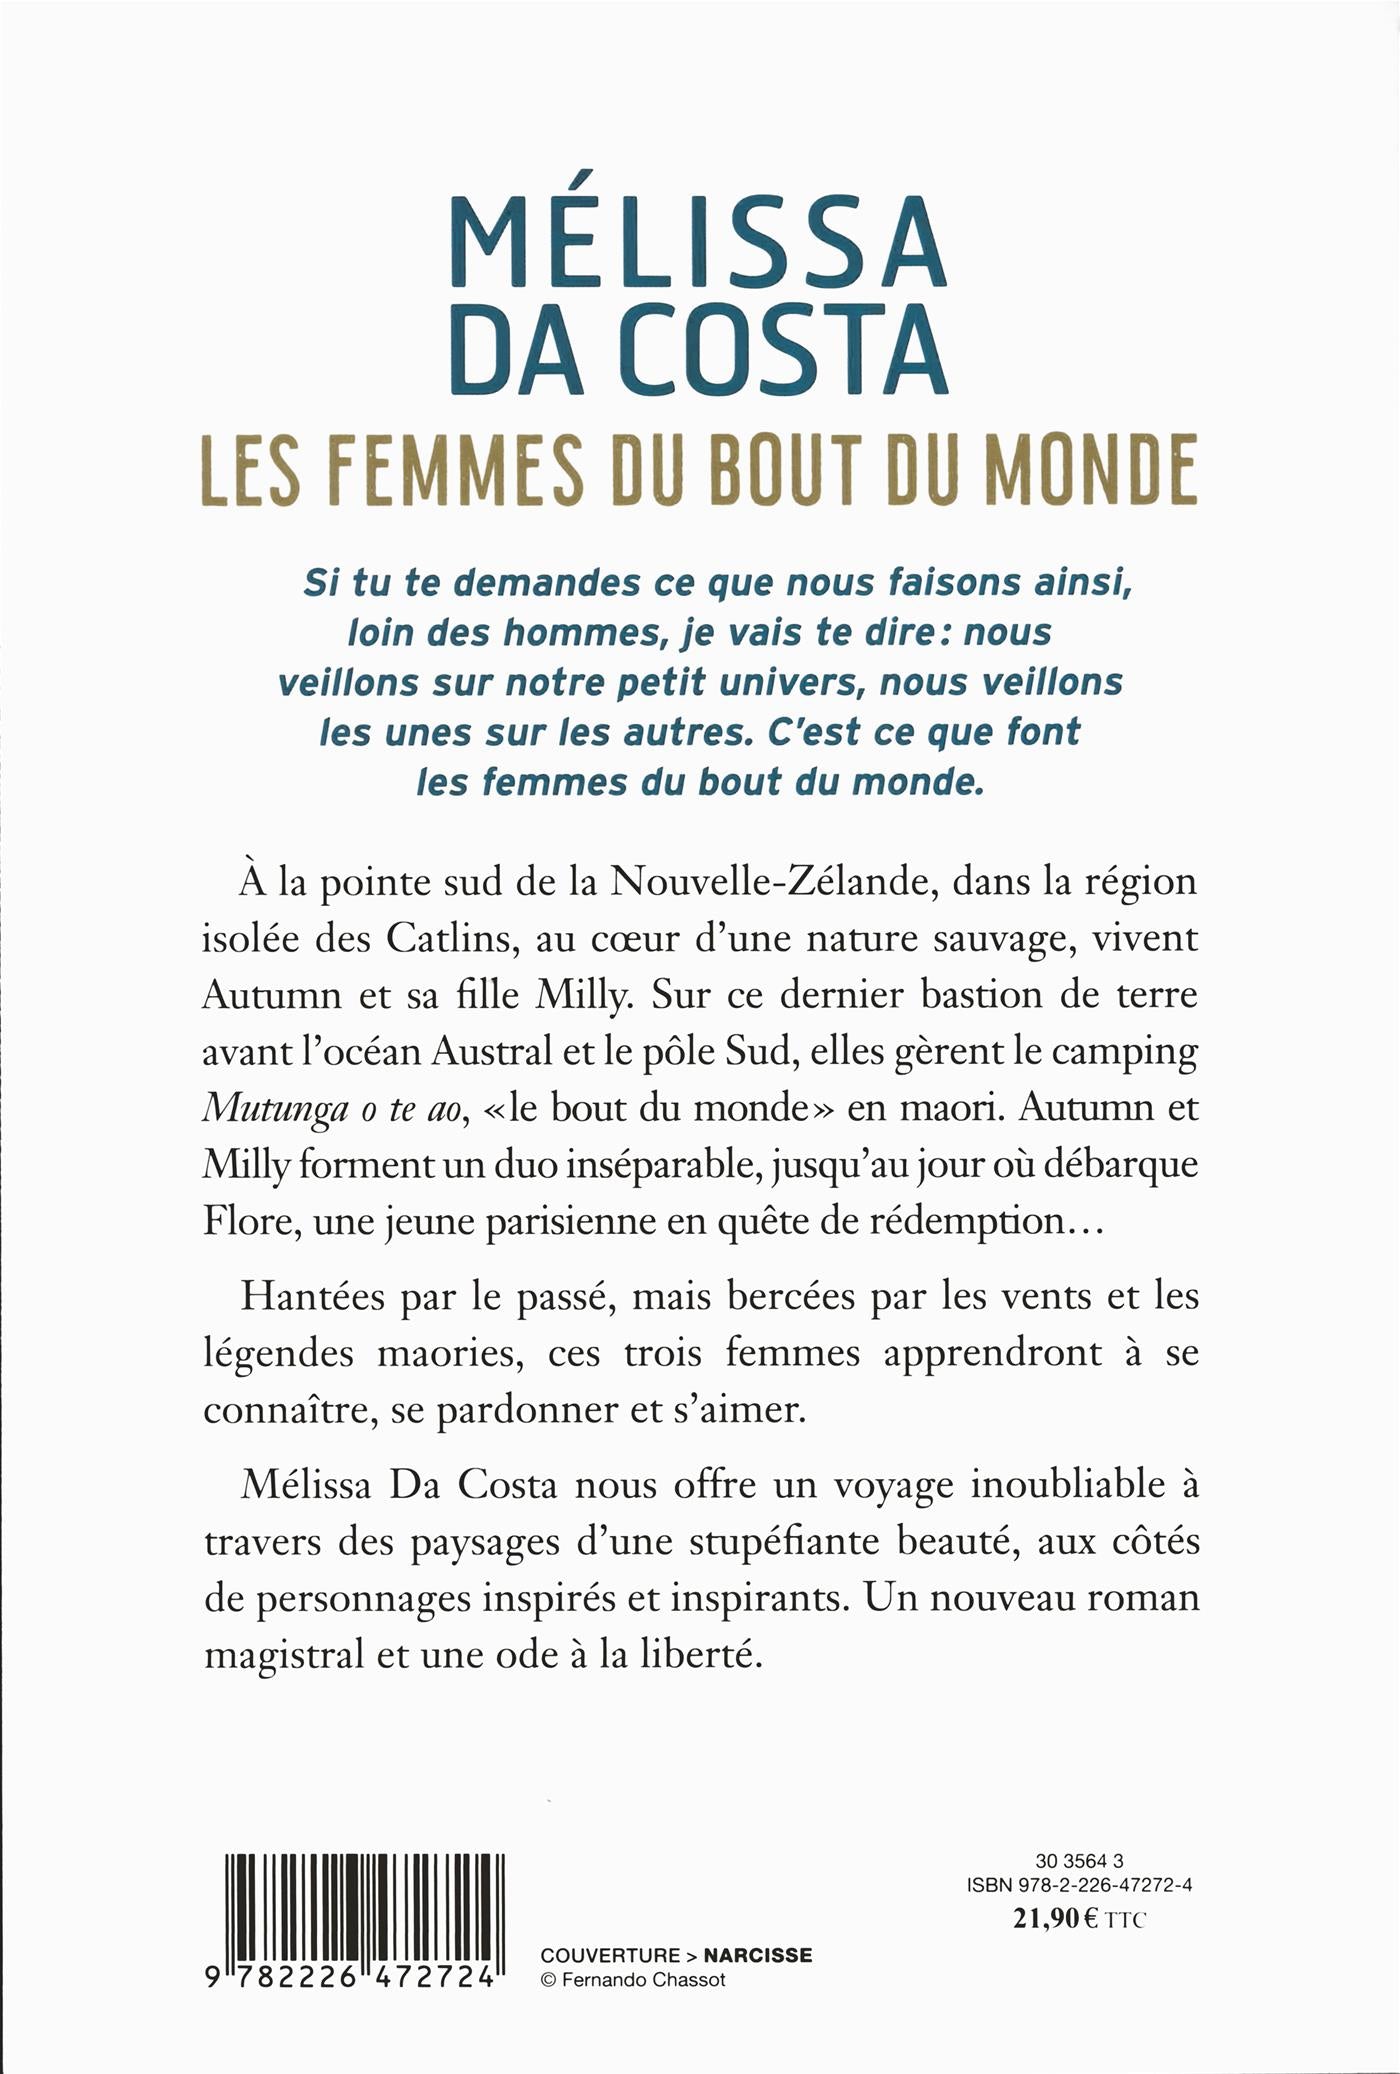 📻 Les Femmes du Bout du Monde - Mélissa Da Costa 